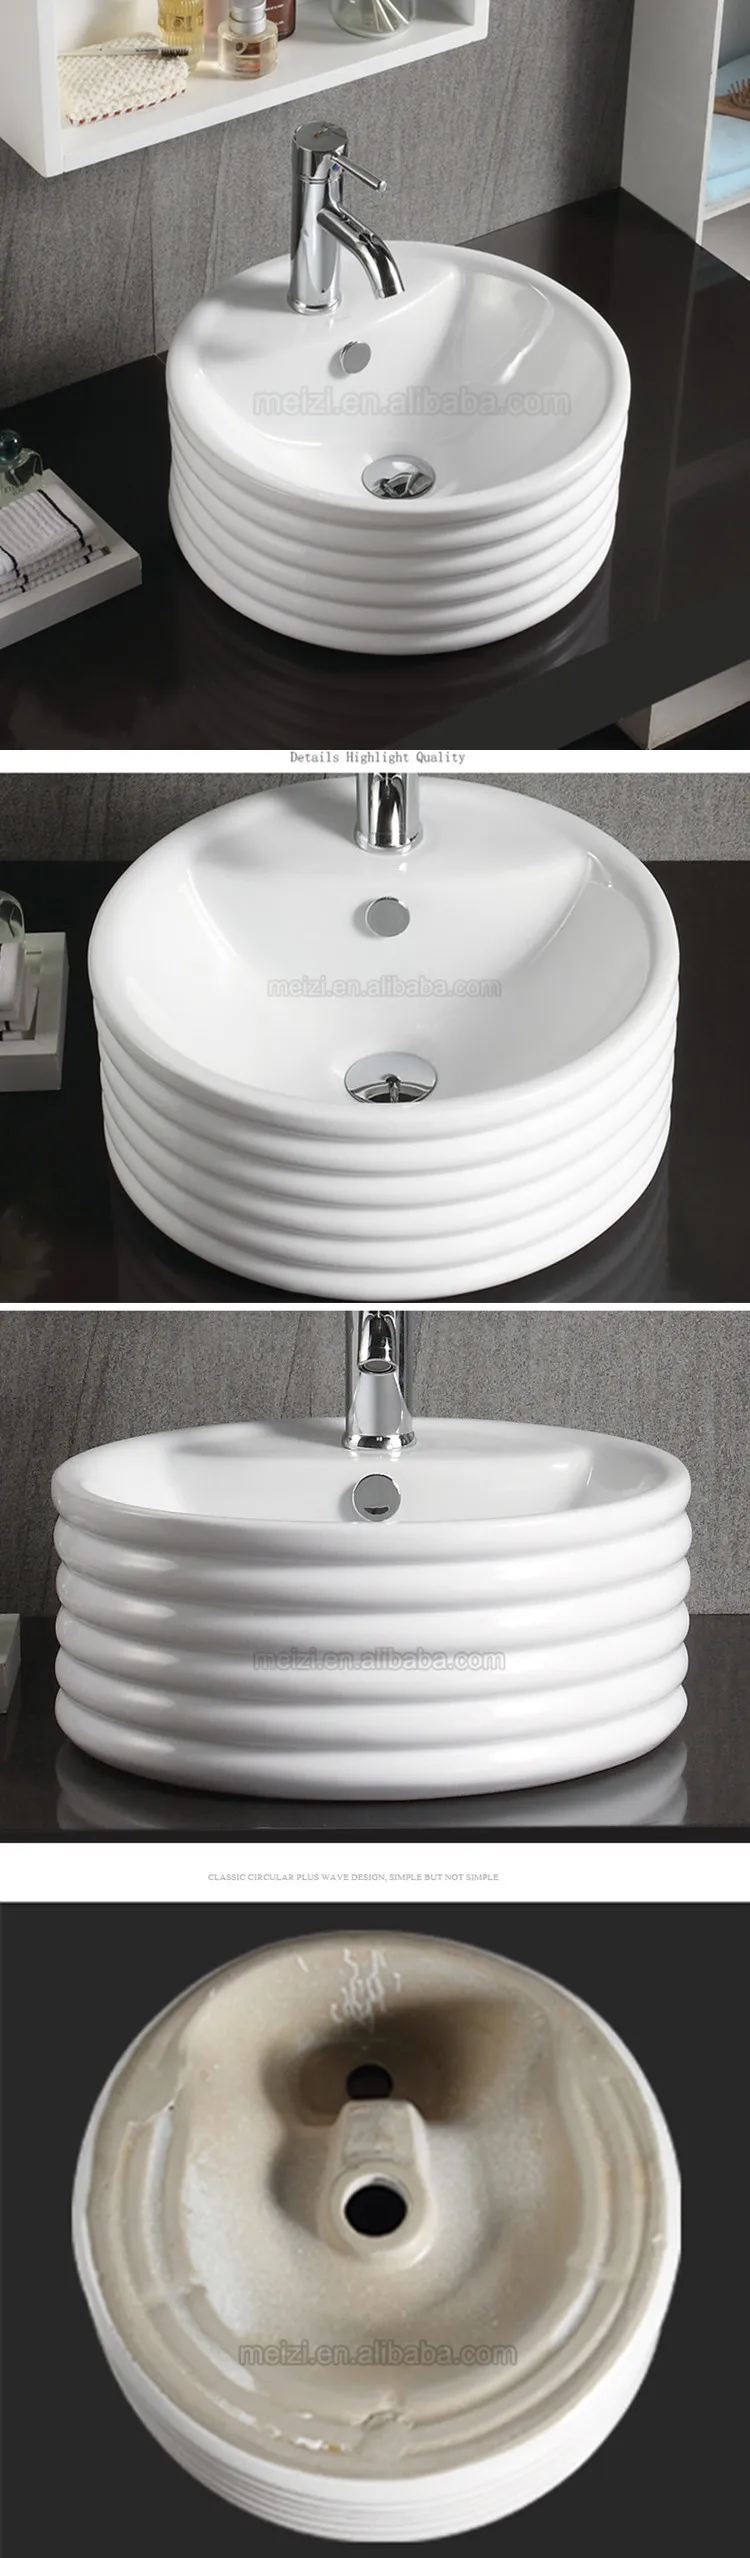 Bathroom porcelain semi recessed basin